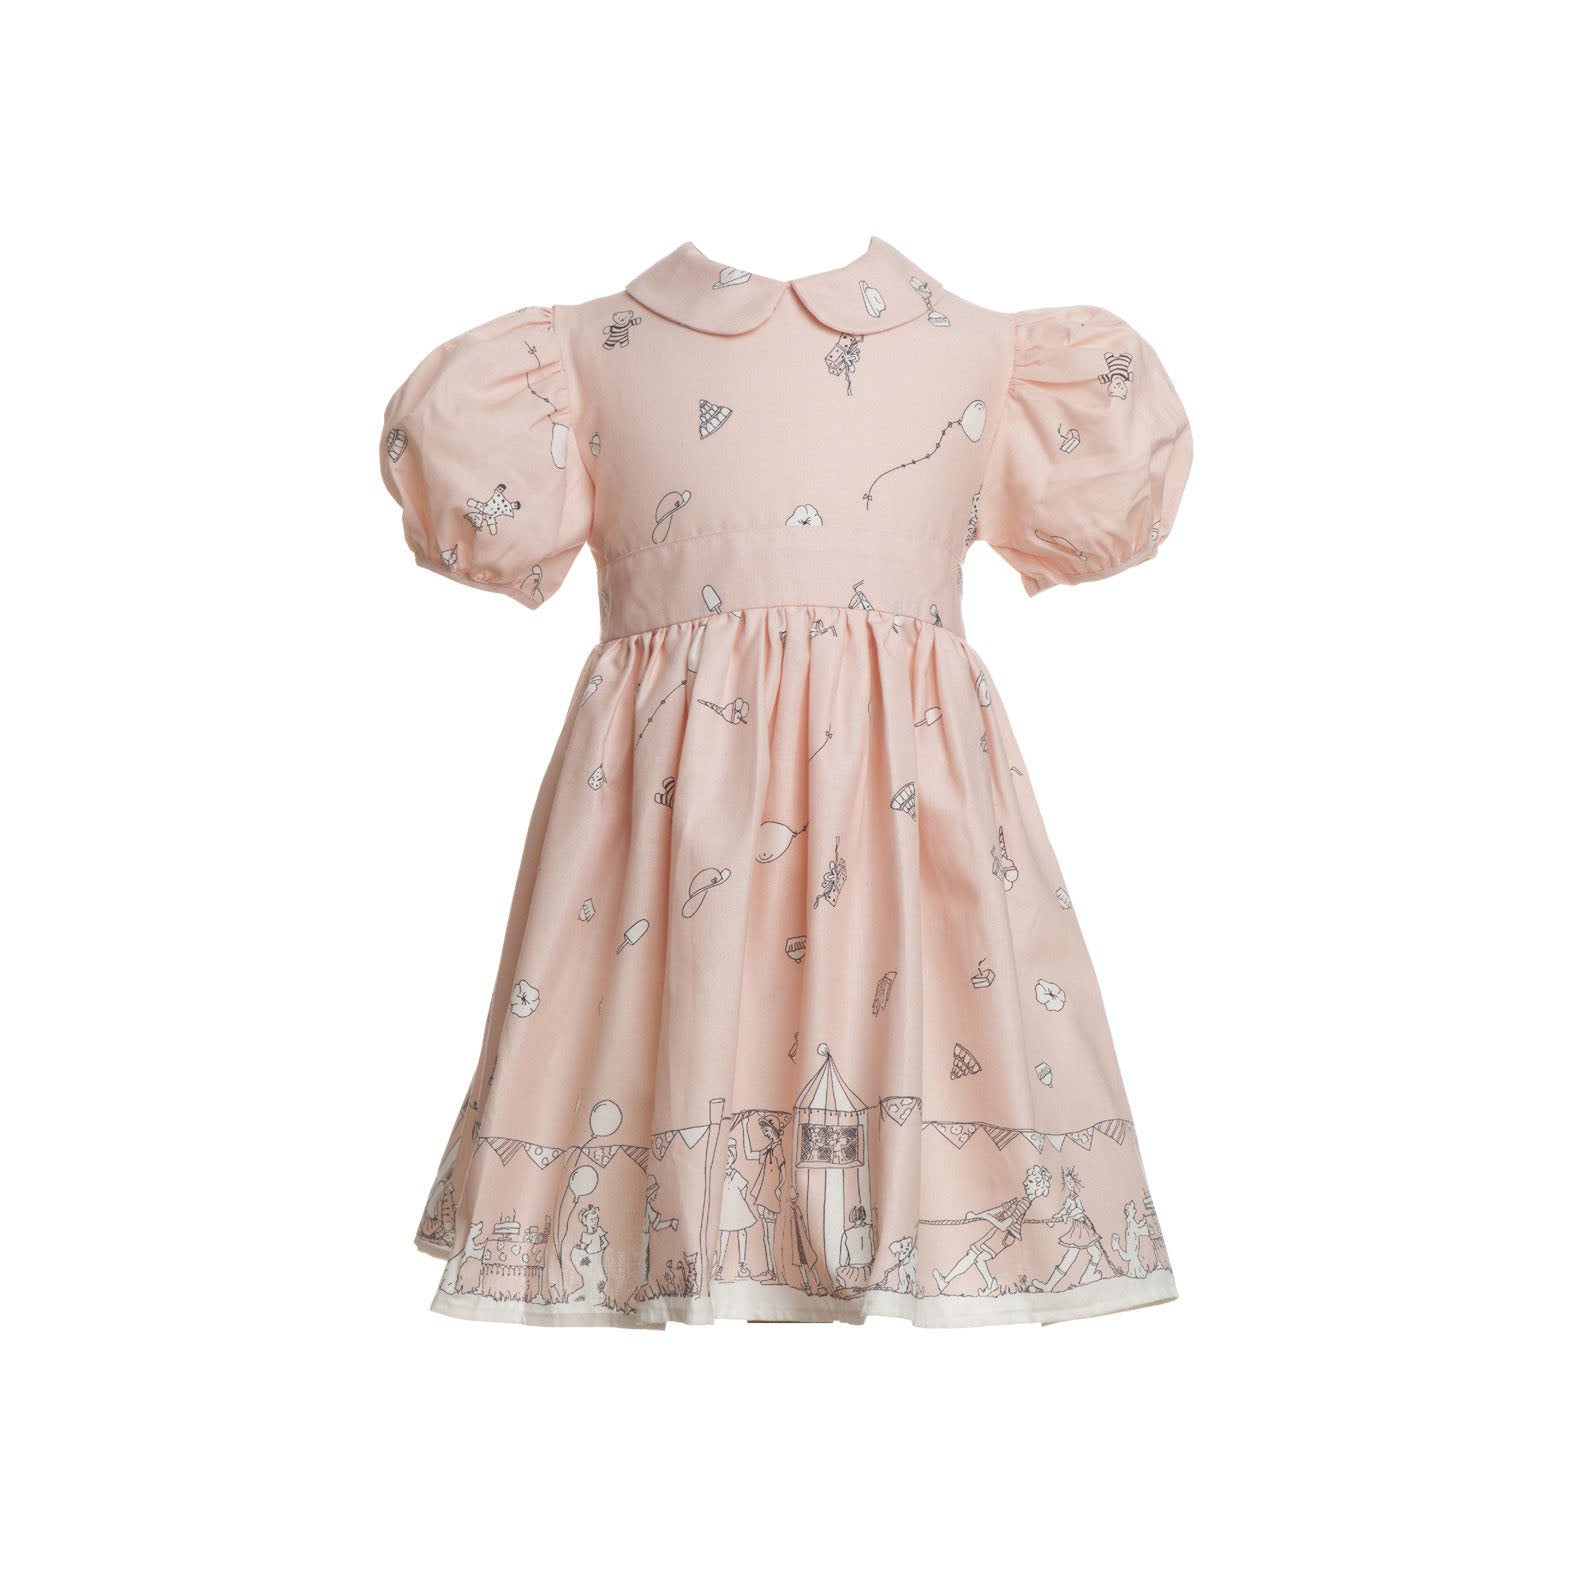 Archive Alice children's dress - Birthday Bash Pink